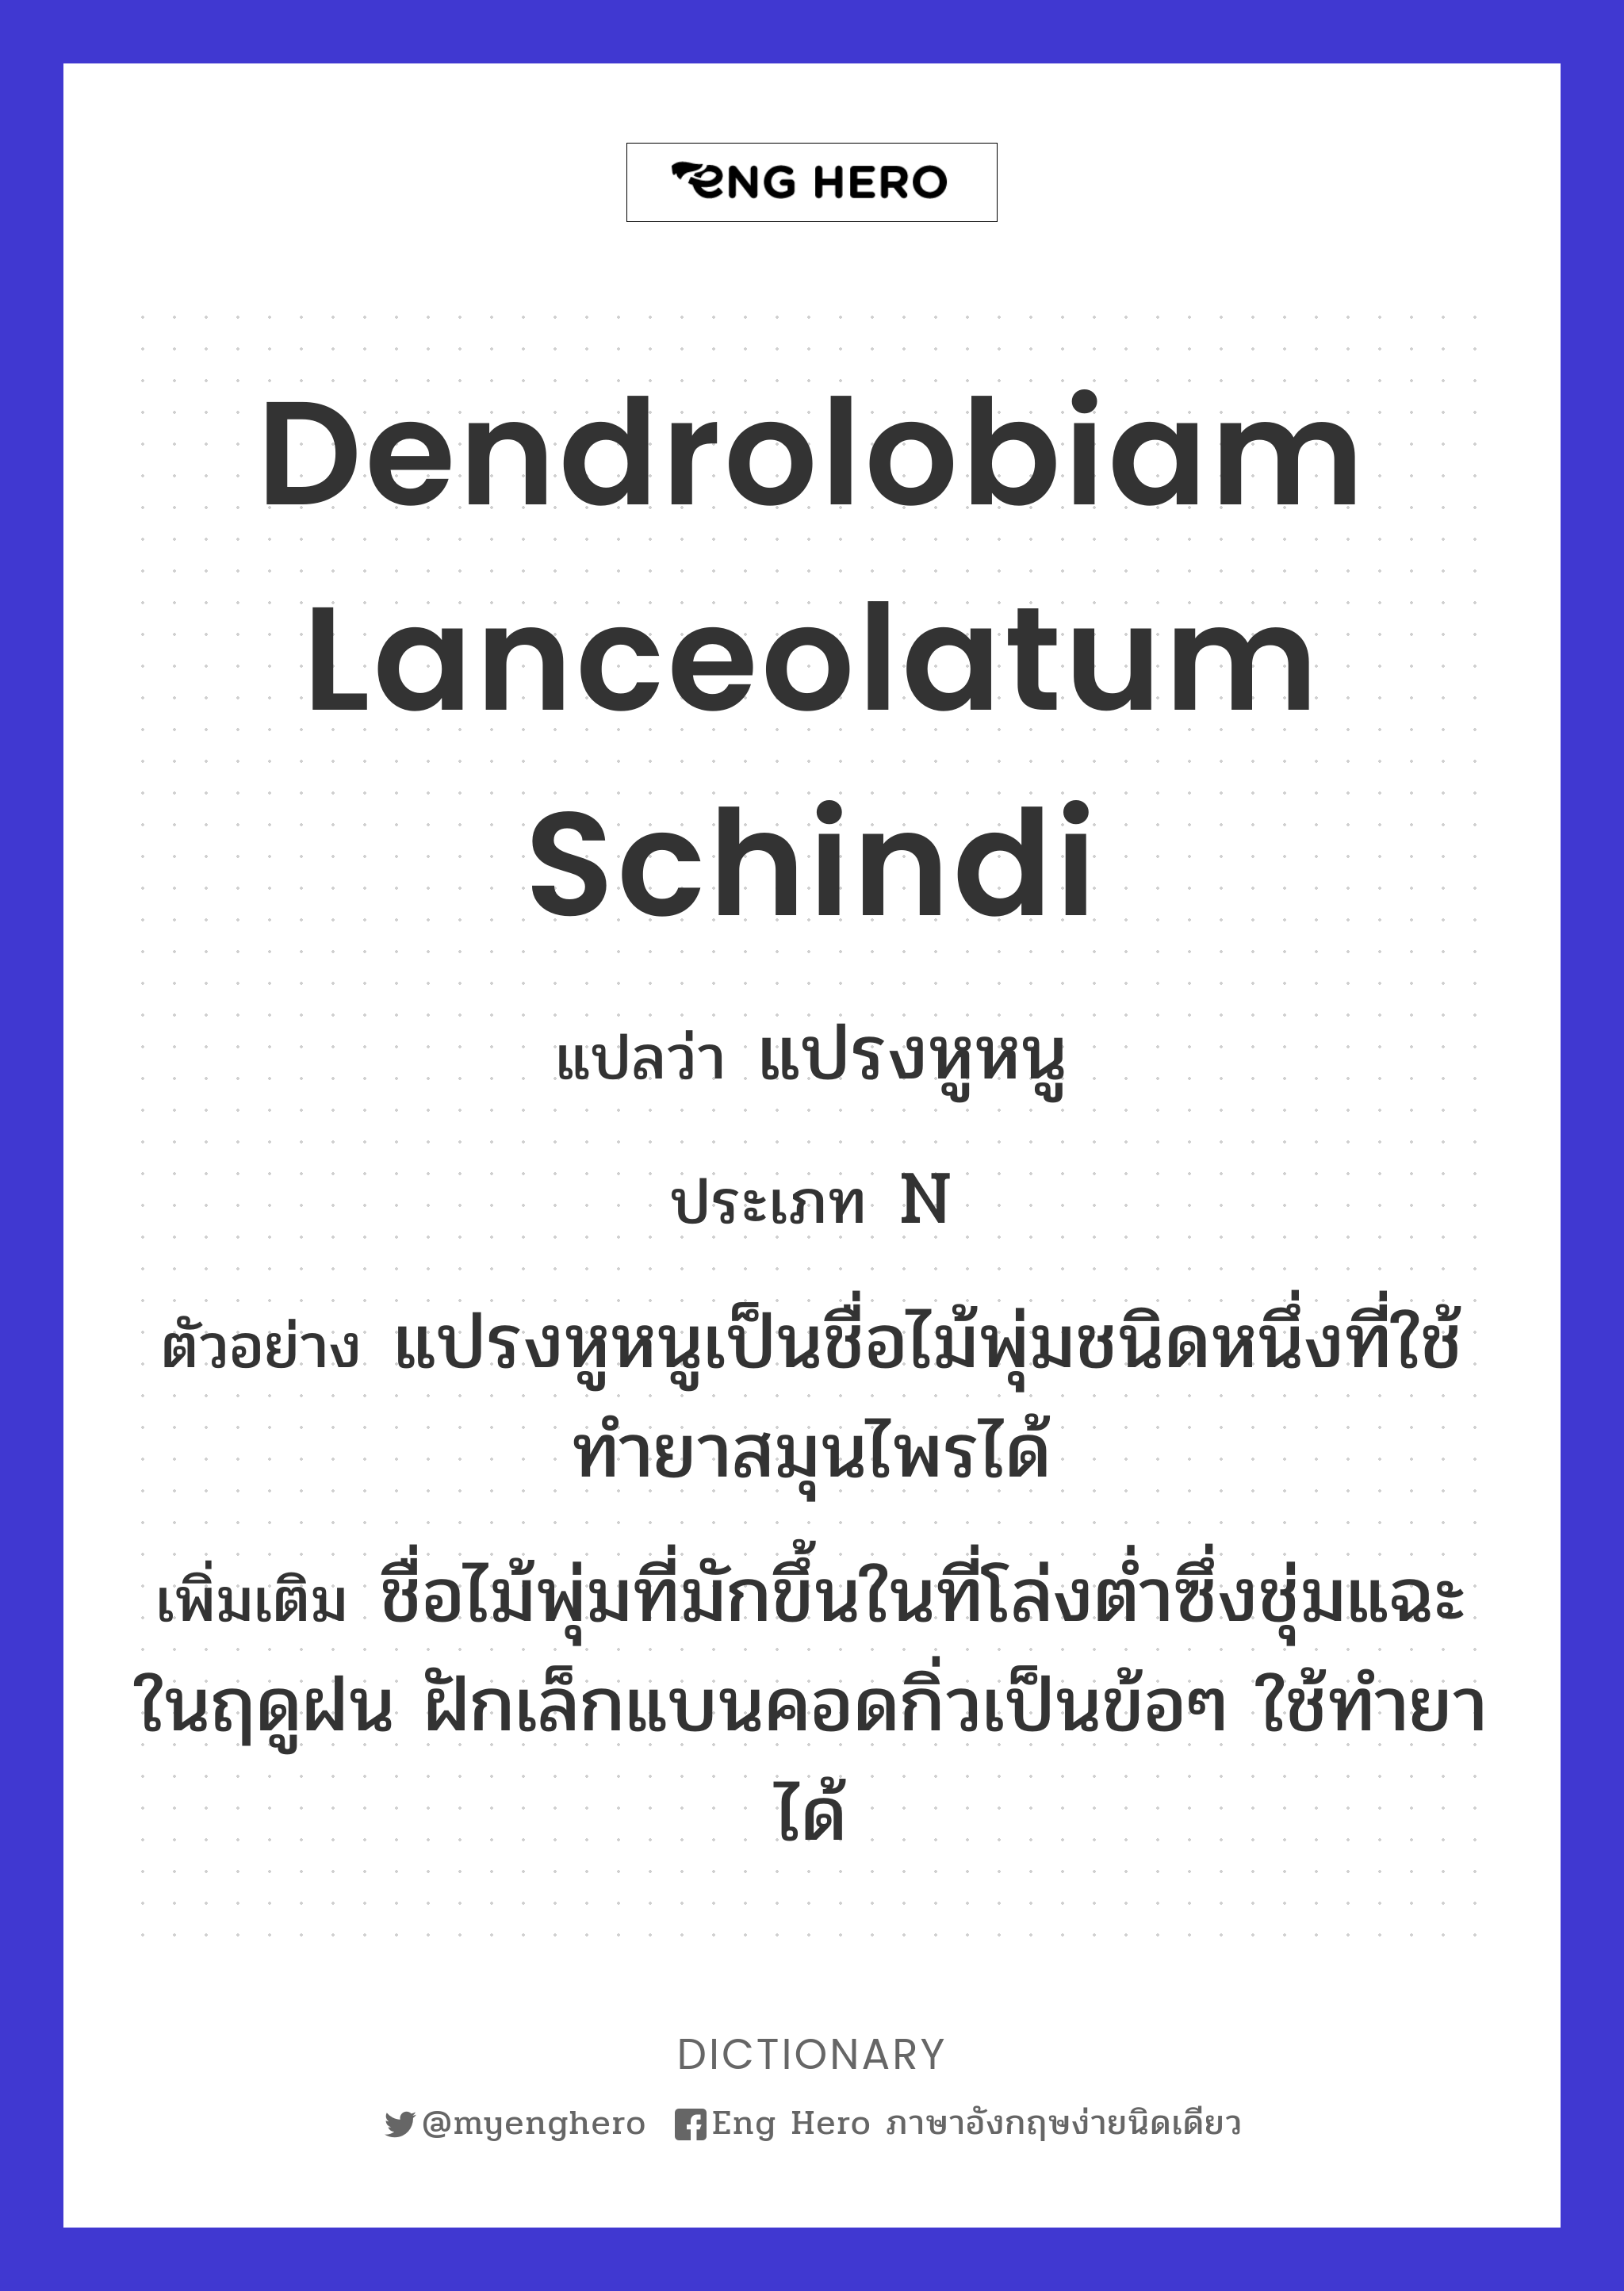 Dendrolobiam lanceolatum Schindi